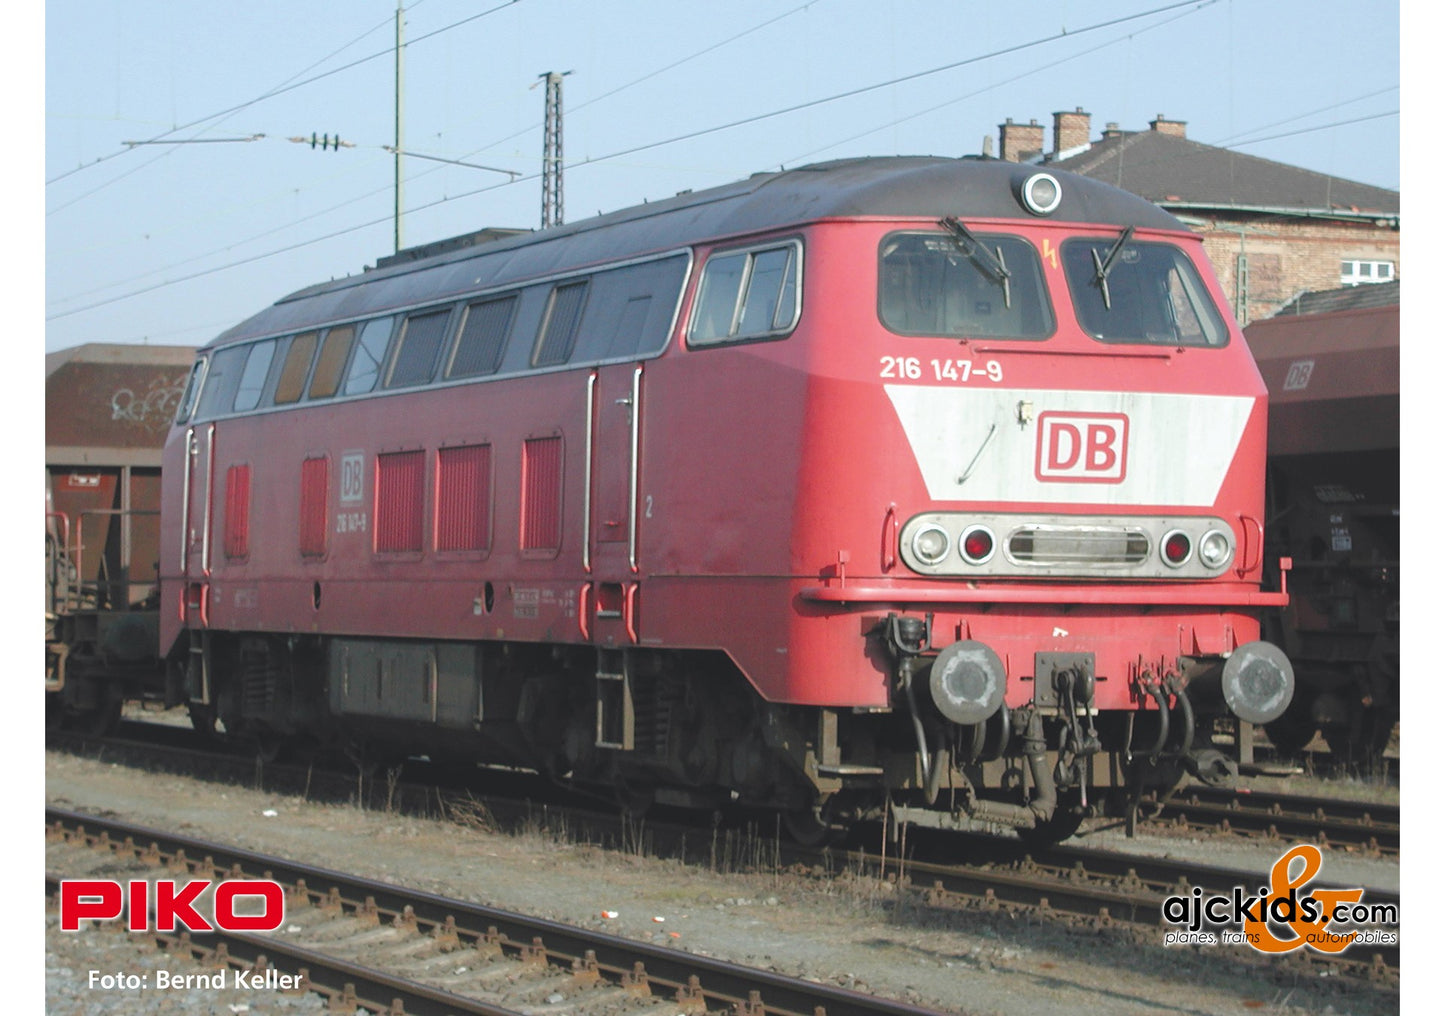 Piko 52412 - BR 216 Diesel Locomotive DB "Bib scheme" V